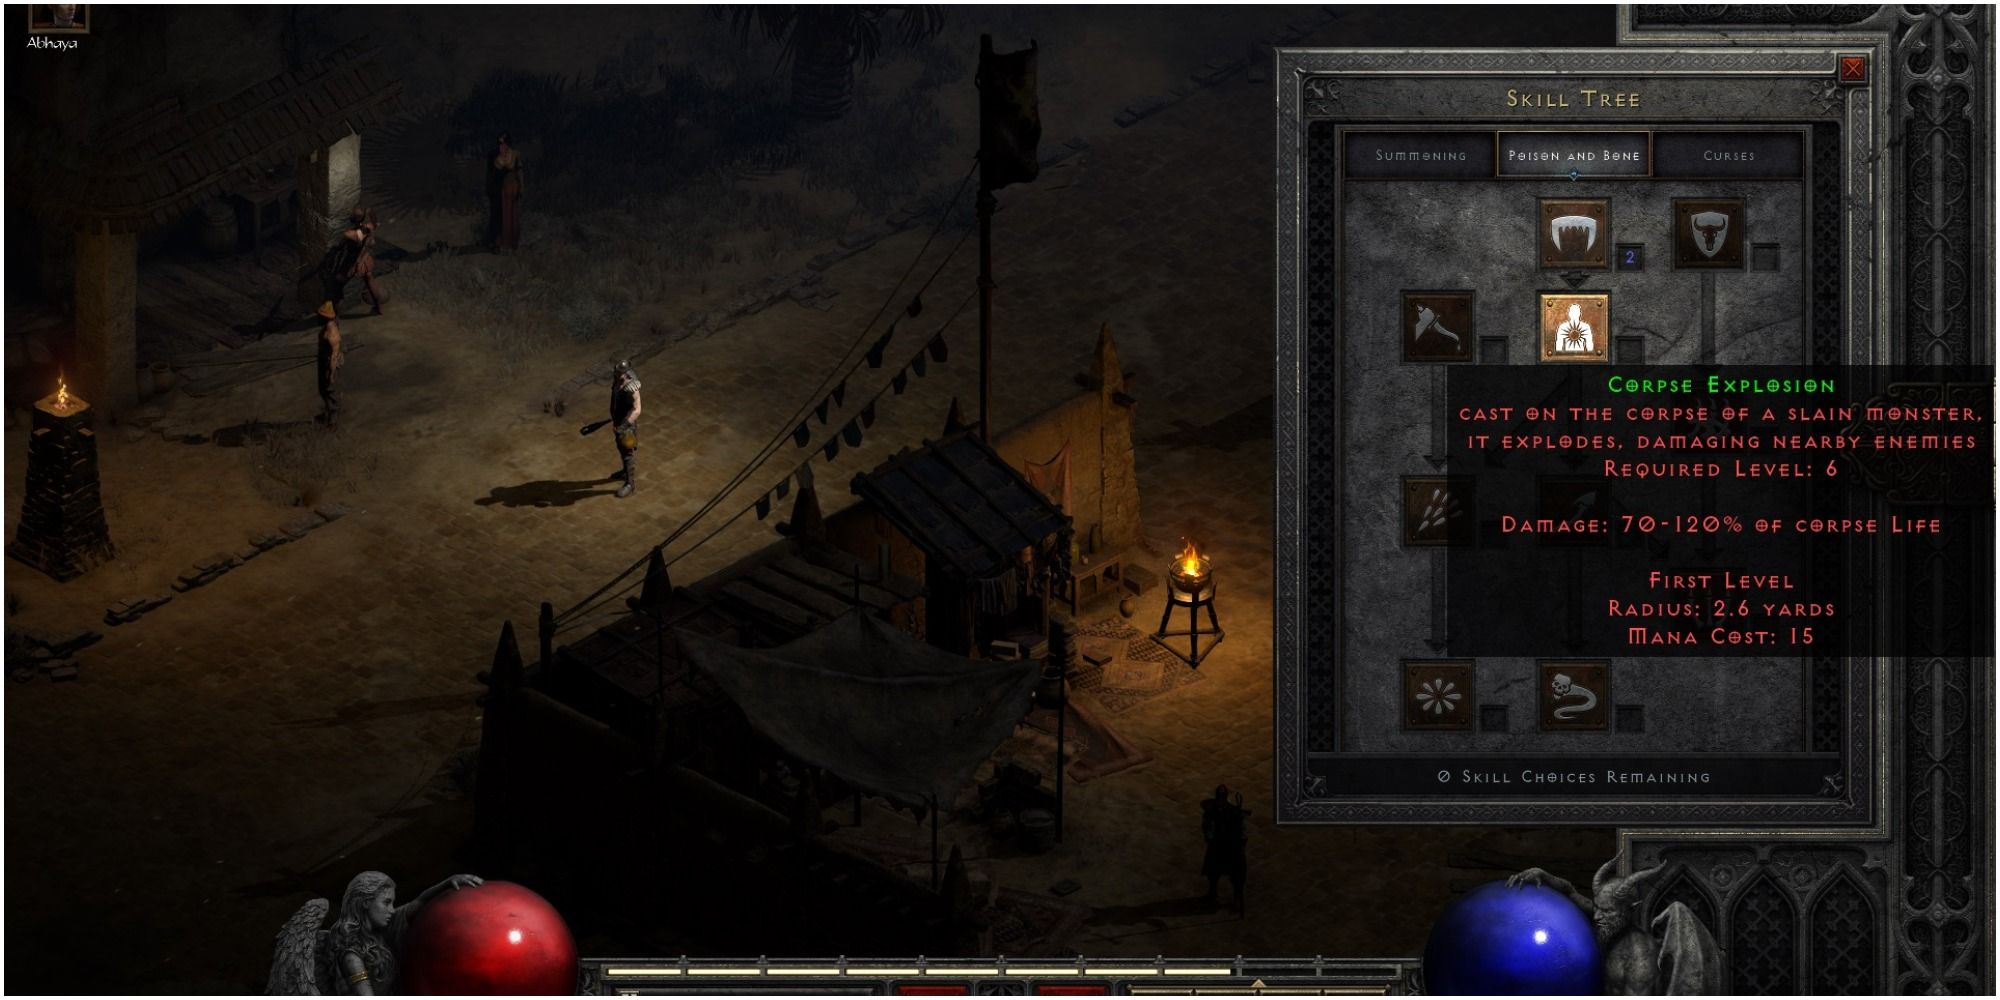 Diablo 2 Resurrected Corpse Explosion Description At Level One